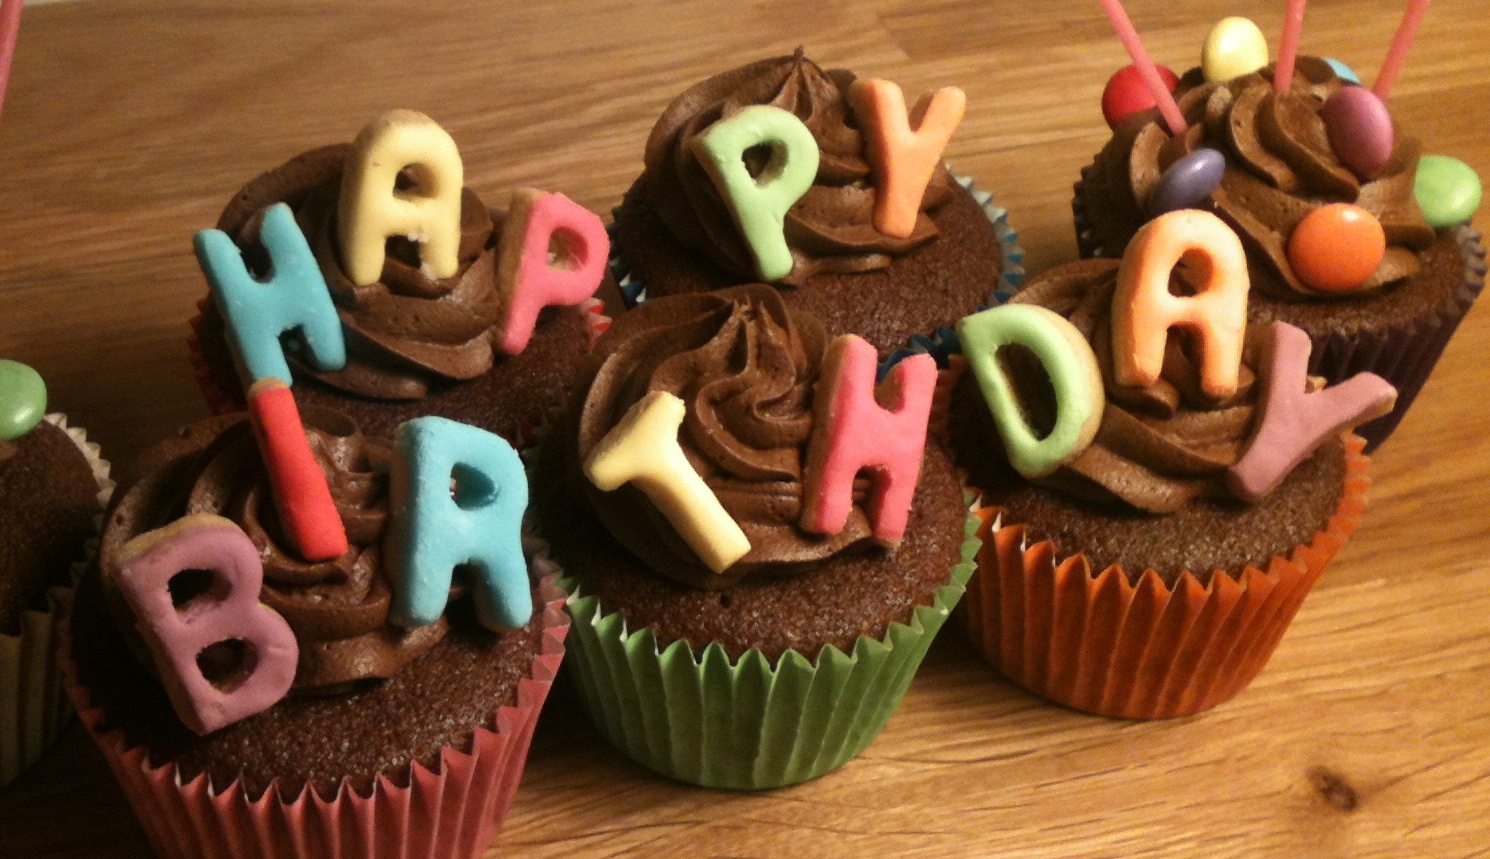 https://www.teleread.com/wp-content/uploads/2013/06/happy-birthday-cupcakes.jpg